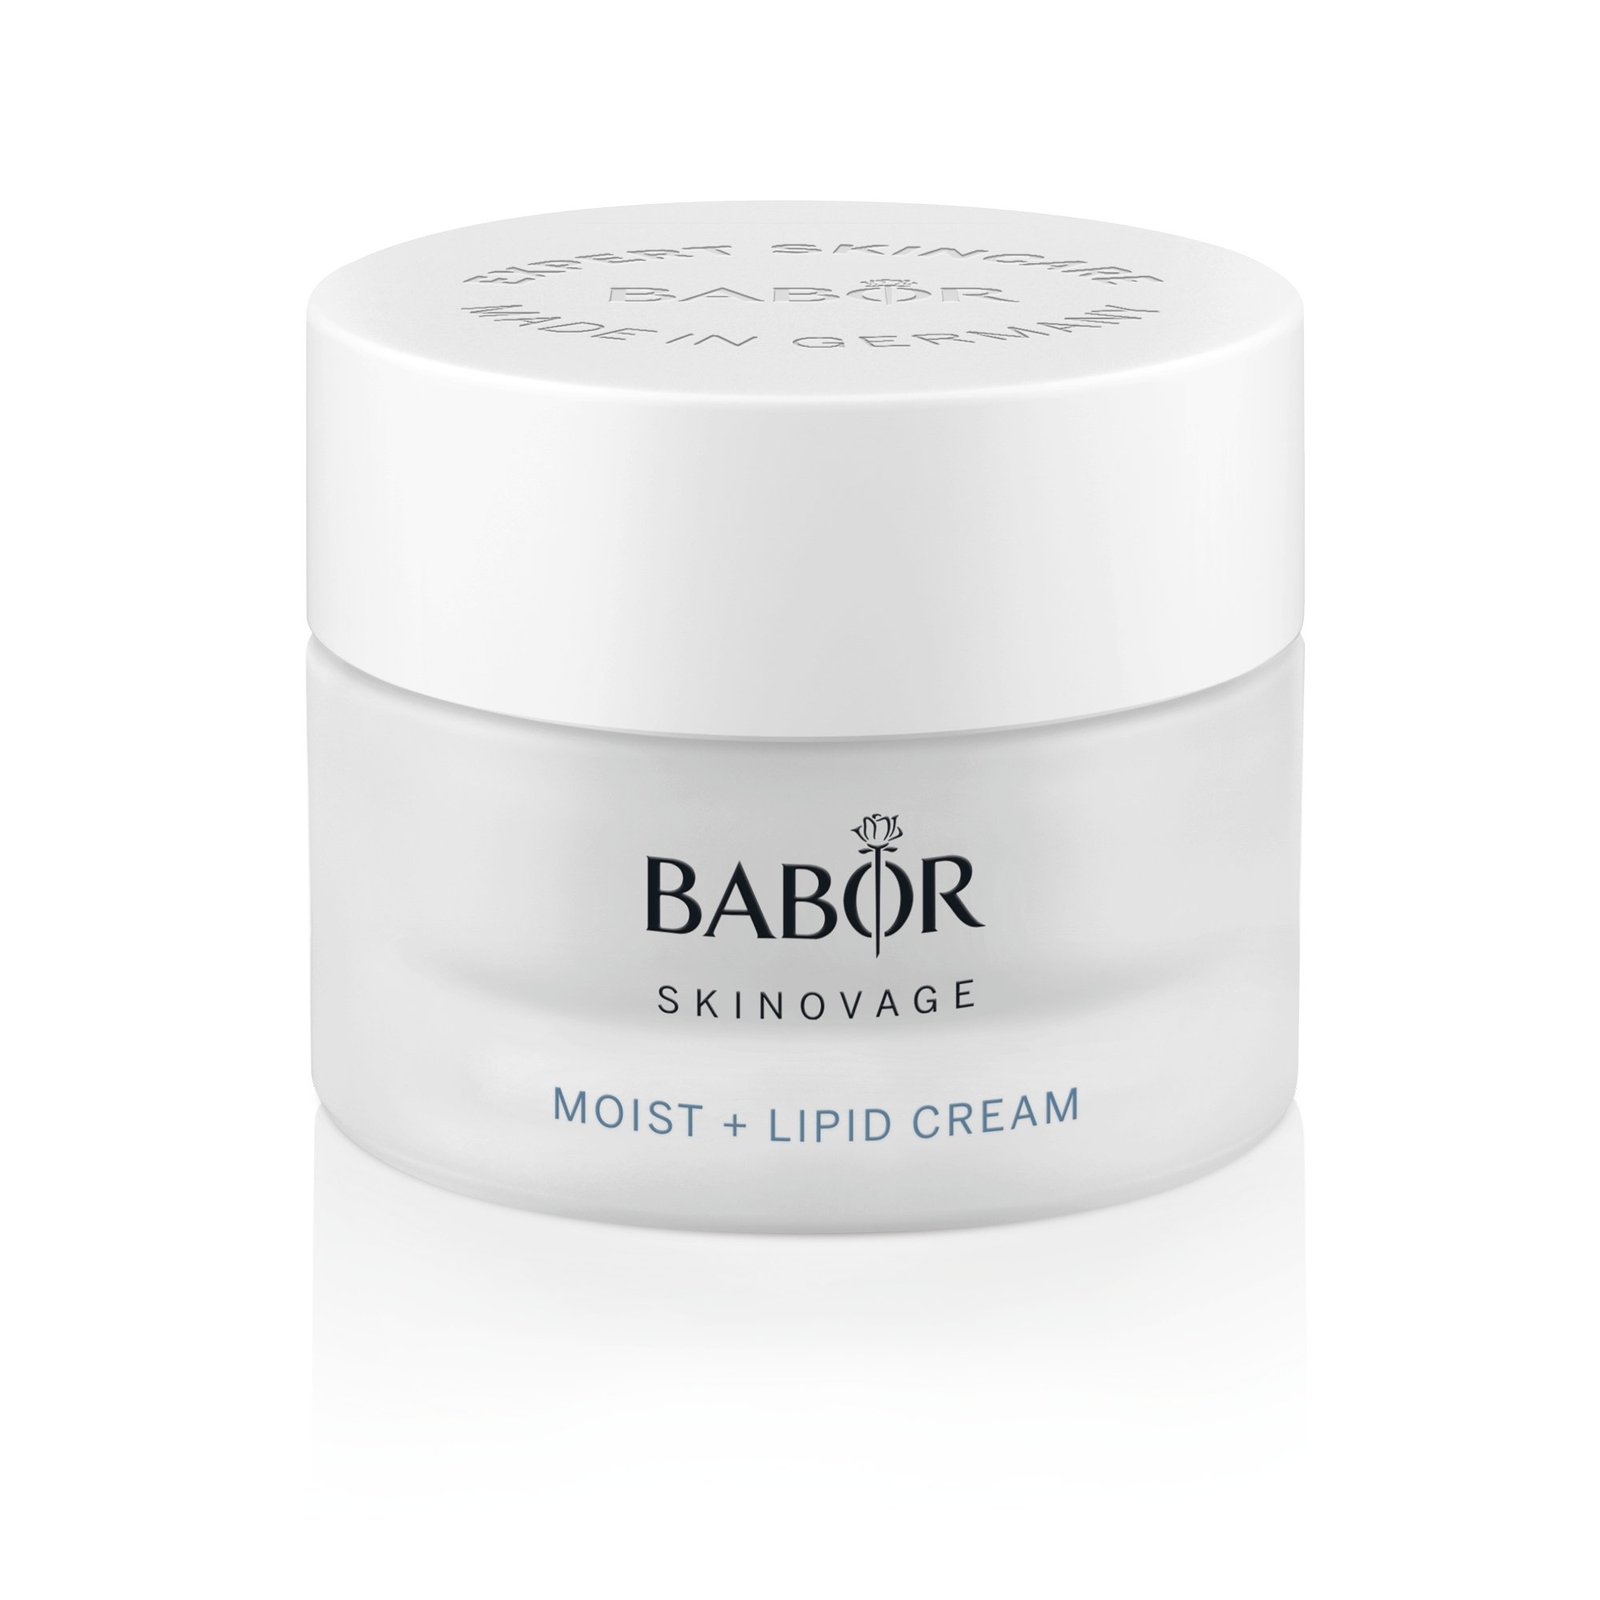 BABOR Skinovage Moisturizing & Lipid Cream 50ml